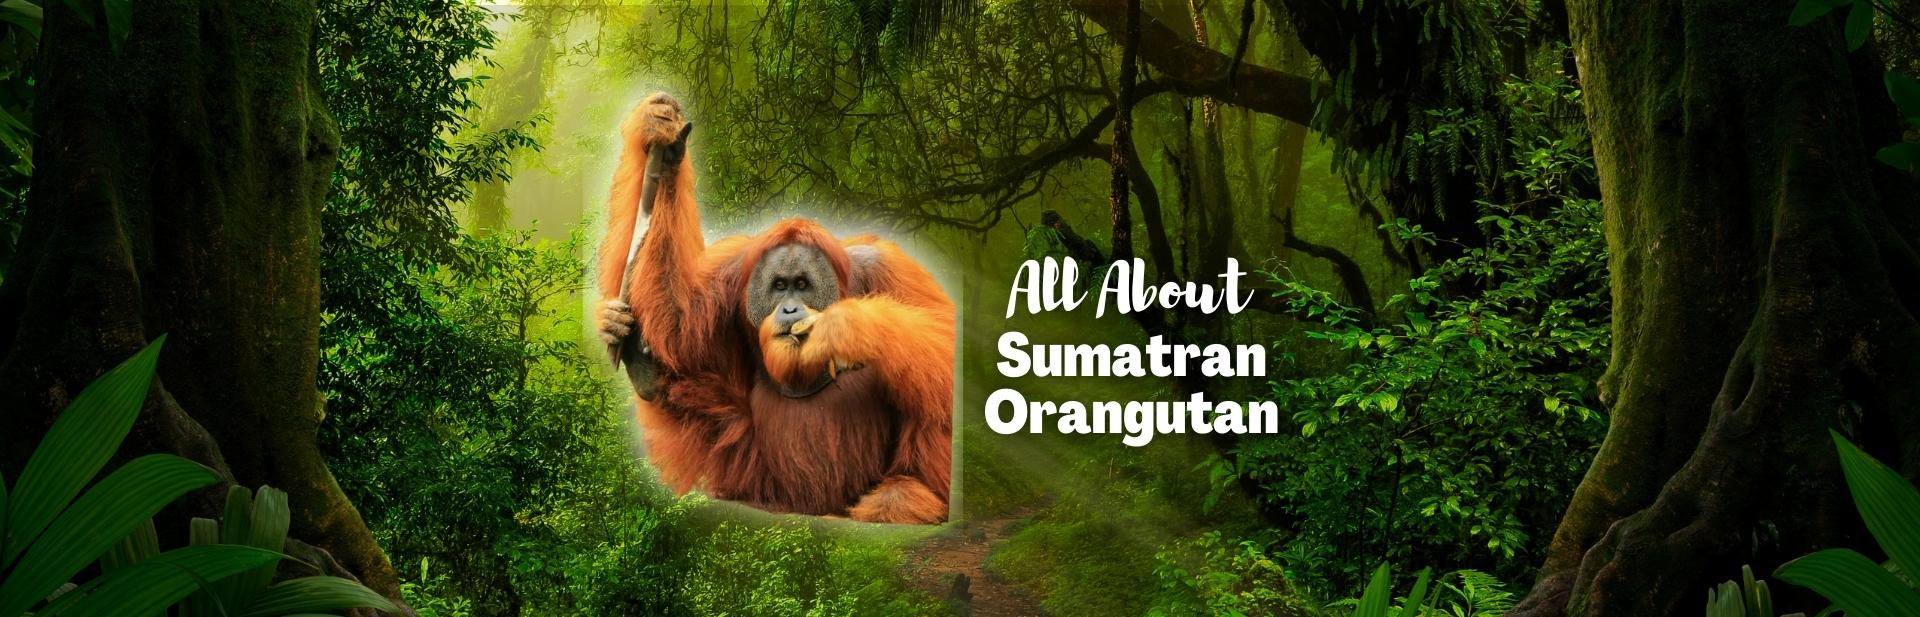 Sumatran Orangutan: The Red Apes of the Forest